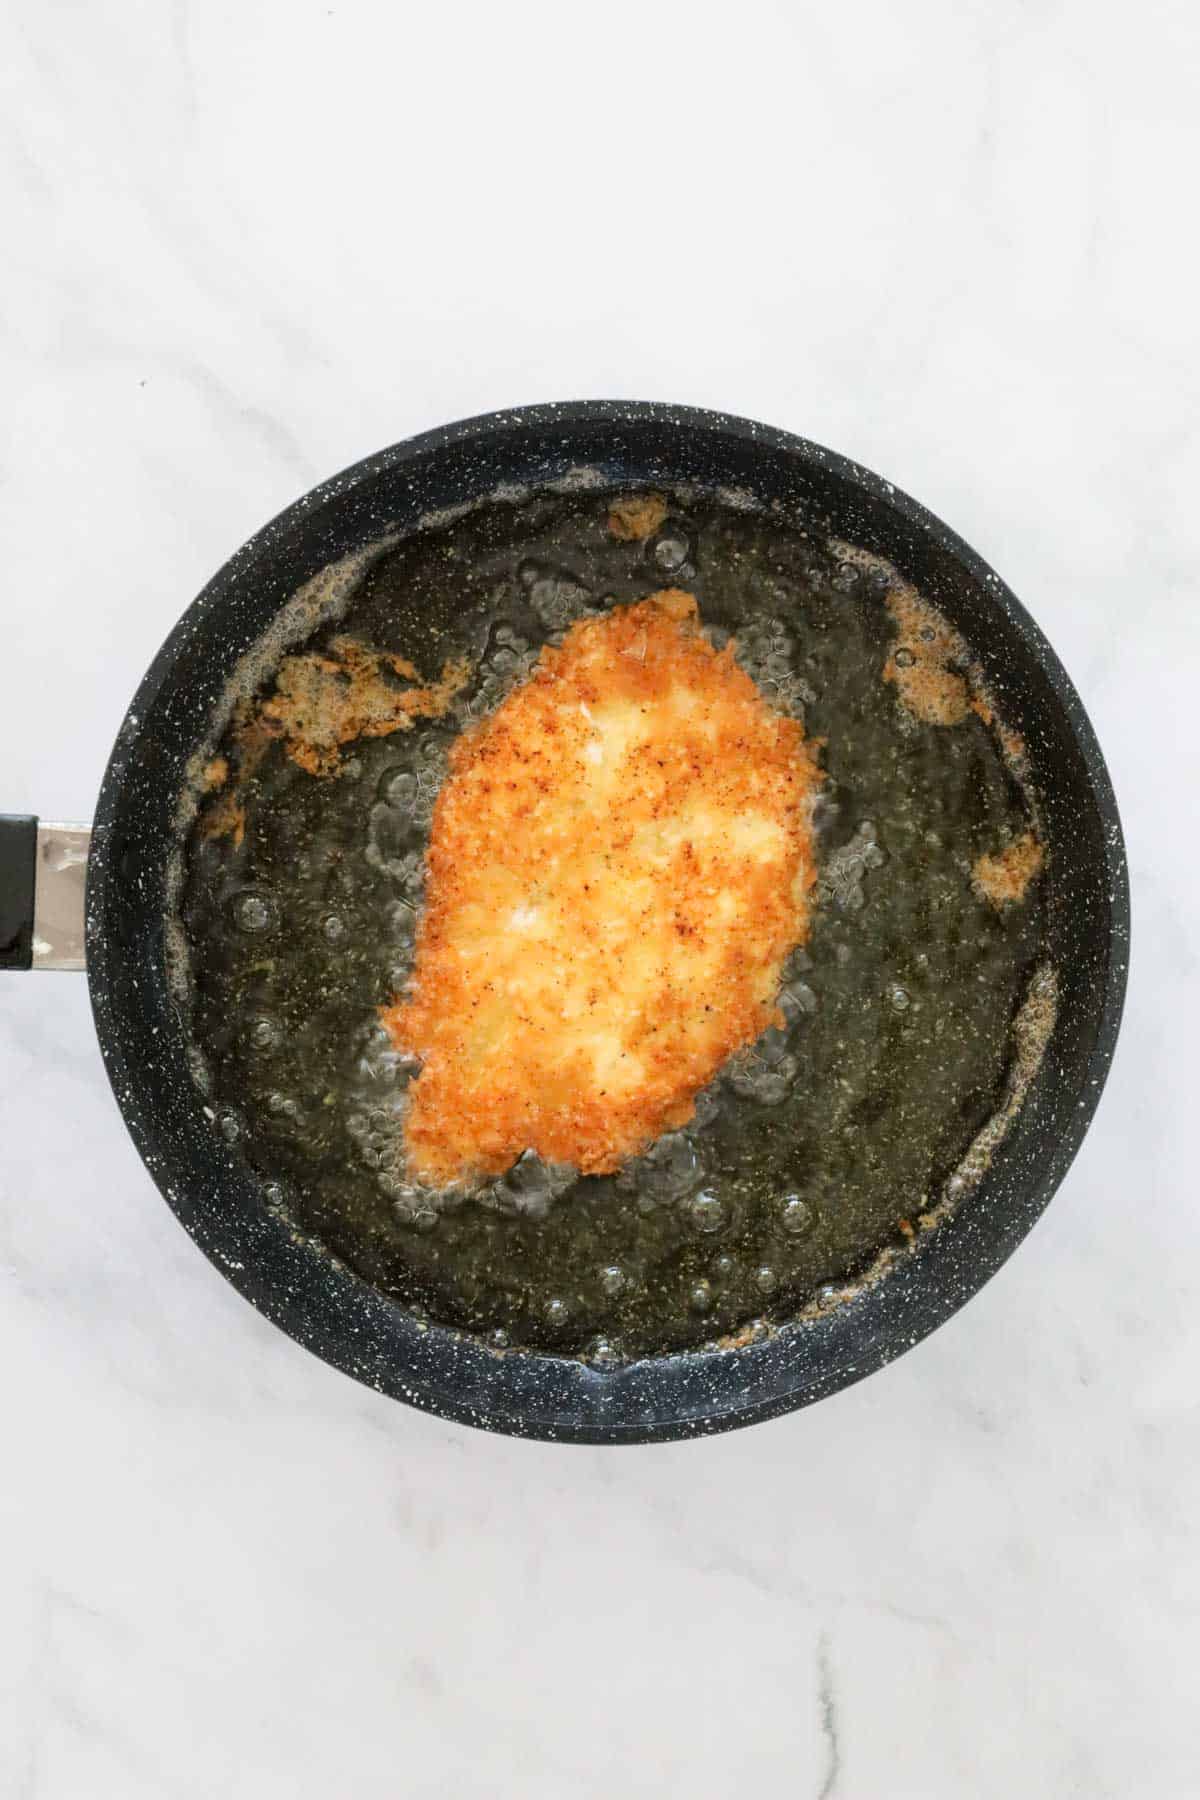 Breaded chicken being fried in oil in a pan.